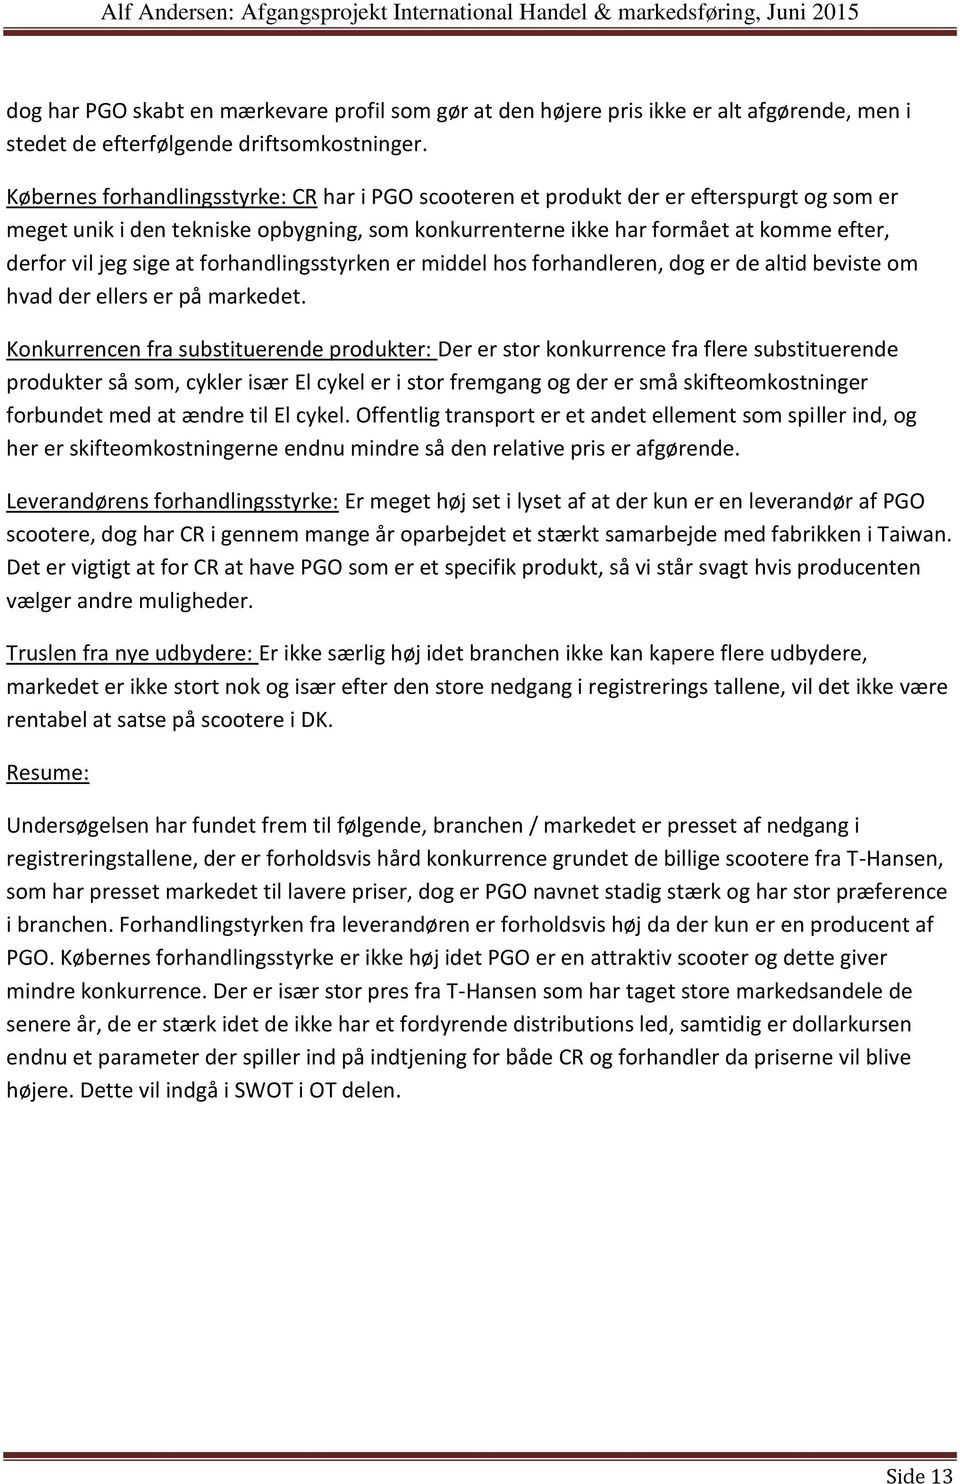 Alf Andersen: Afgangsprojekt International Handel & markedsføring, Juni  Afgangsprojekt. Alf Andersen. Side 1 - PDF Free Download